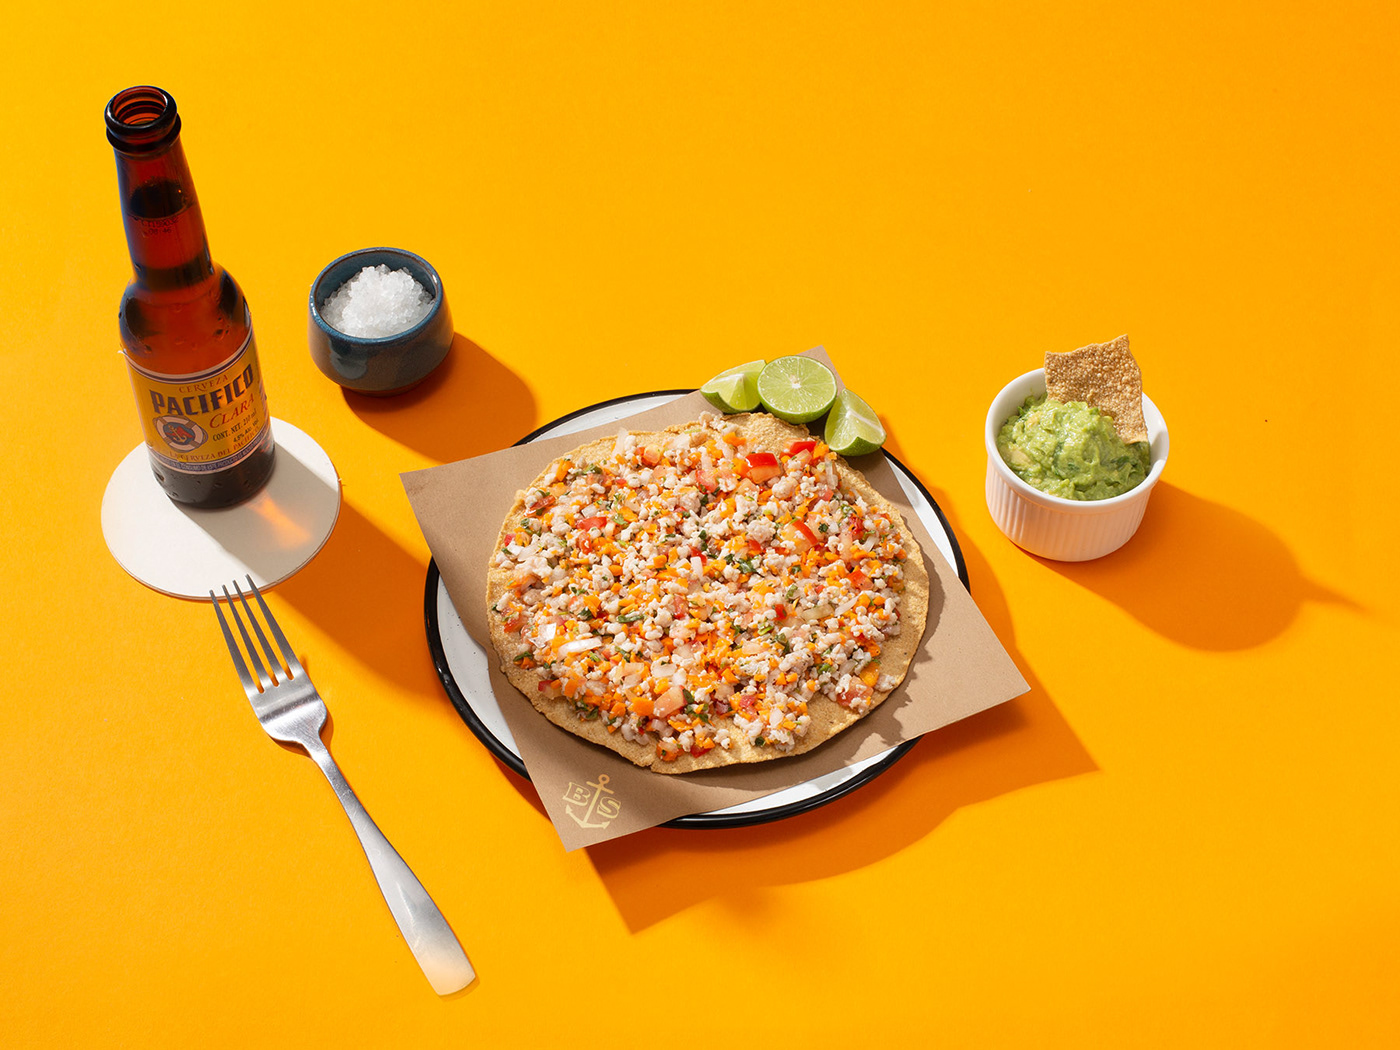 bar social barsocial rebranding MANZANILLO colima mexico food&beverage menu